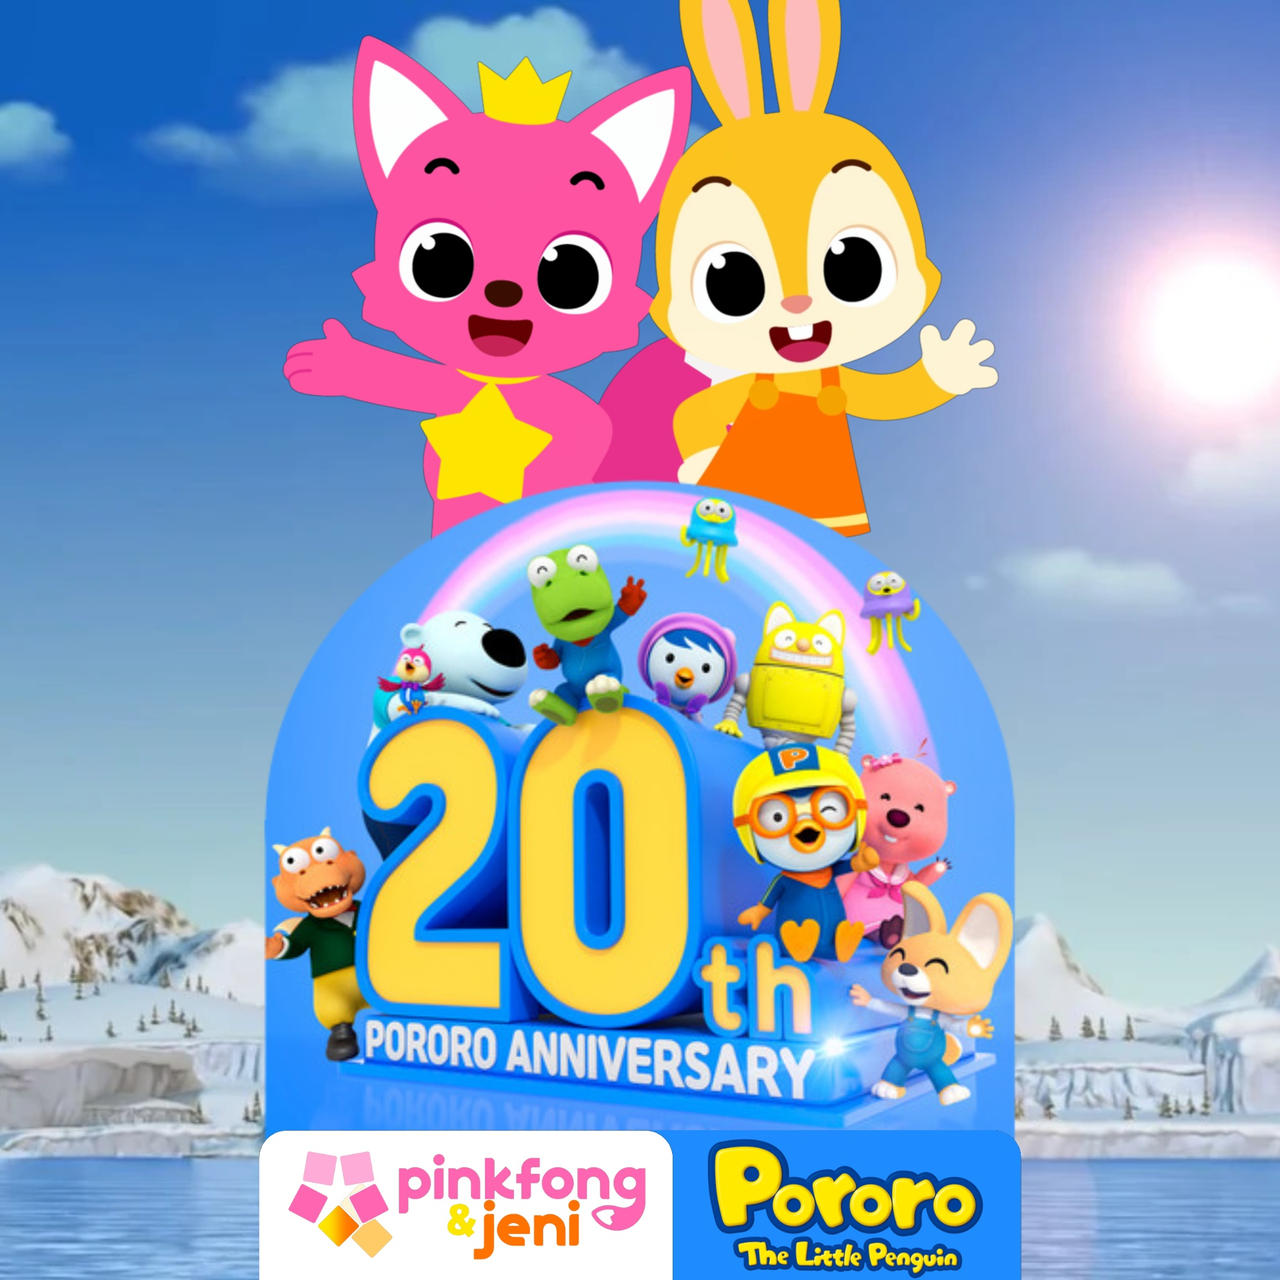 Happy 20th Anniversary Pororo! Our team always wish you all the best 🎊  #pororo #cartoon